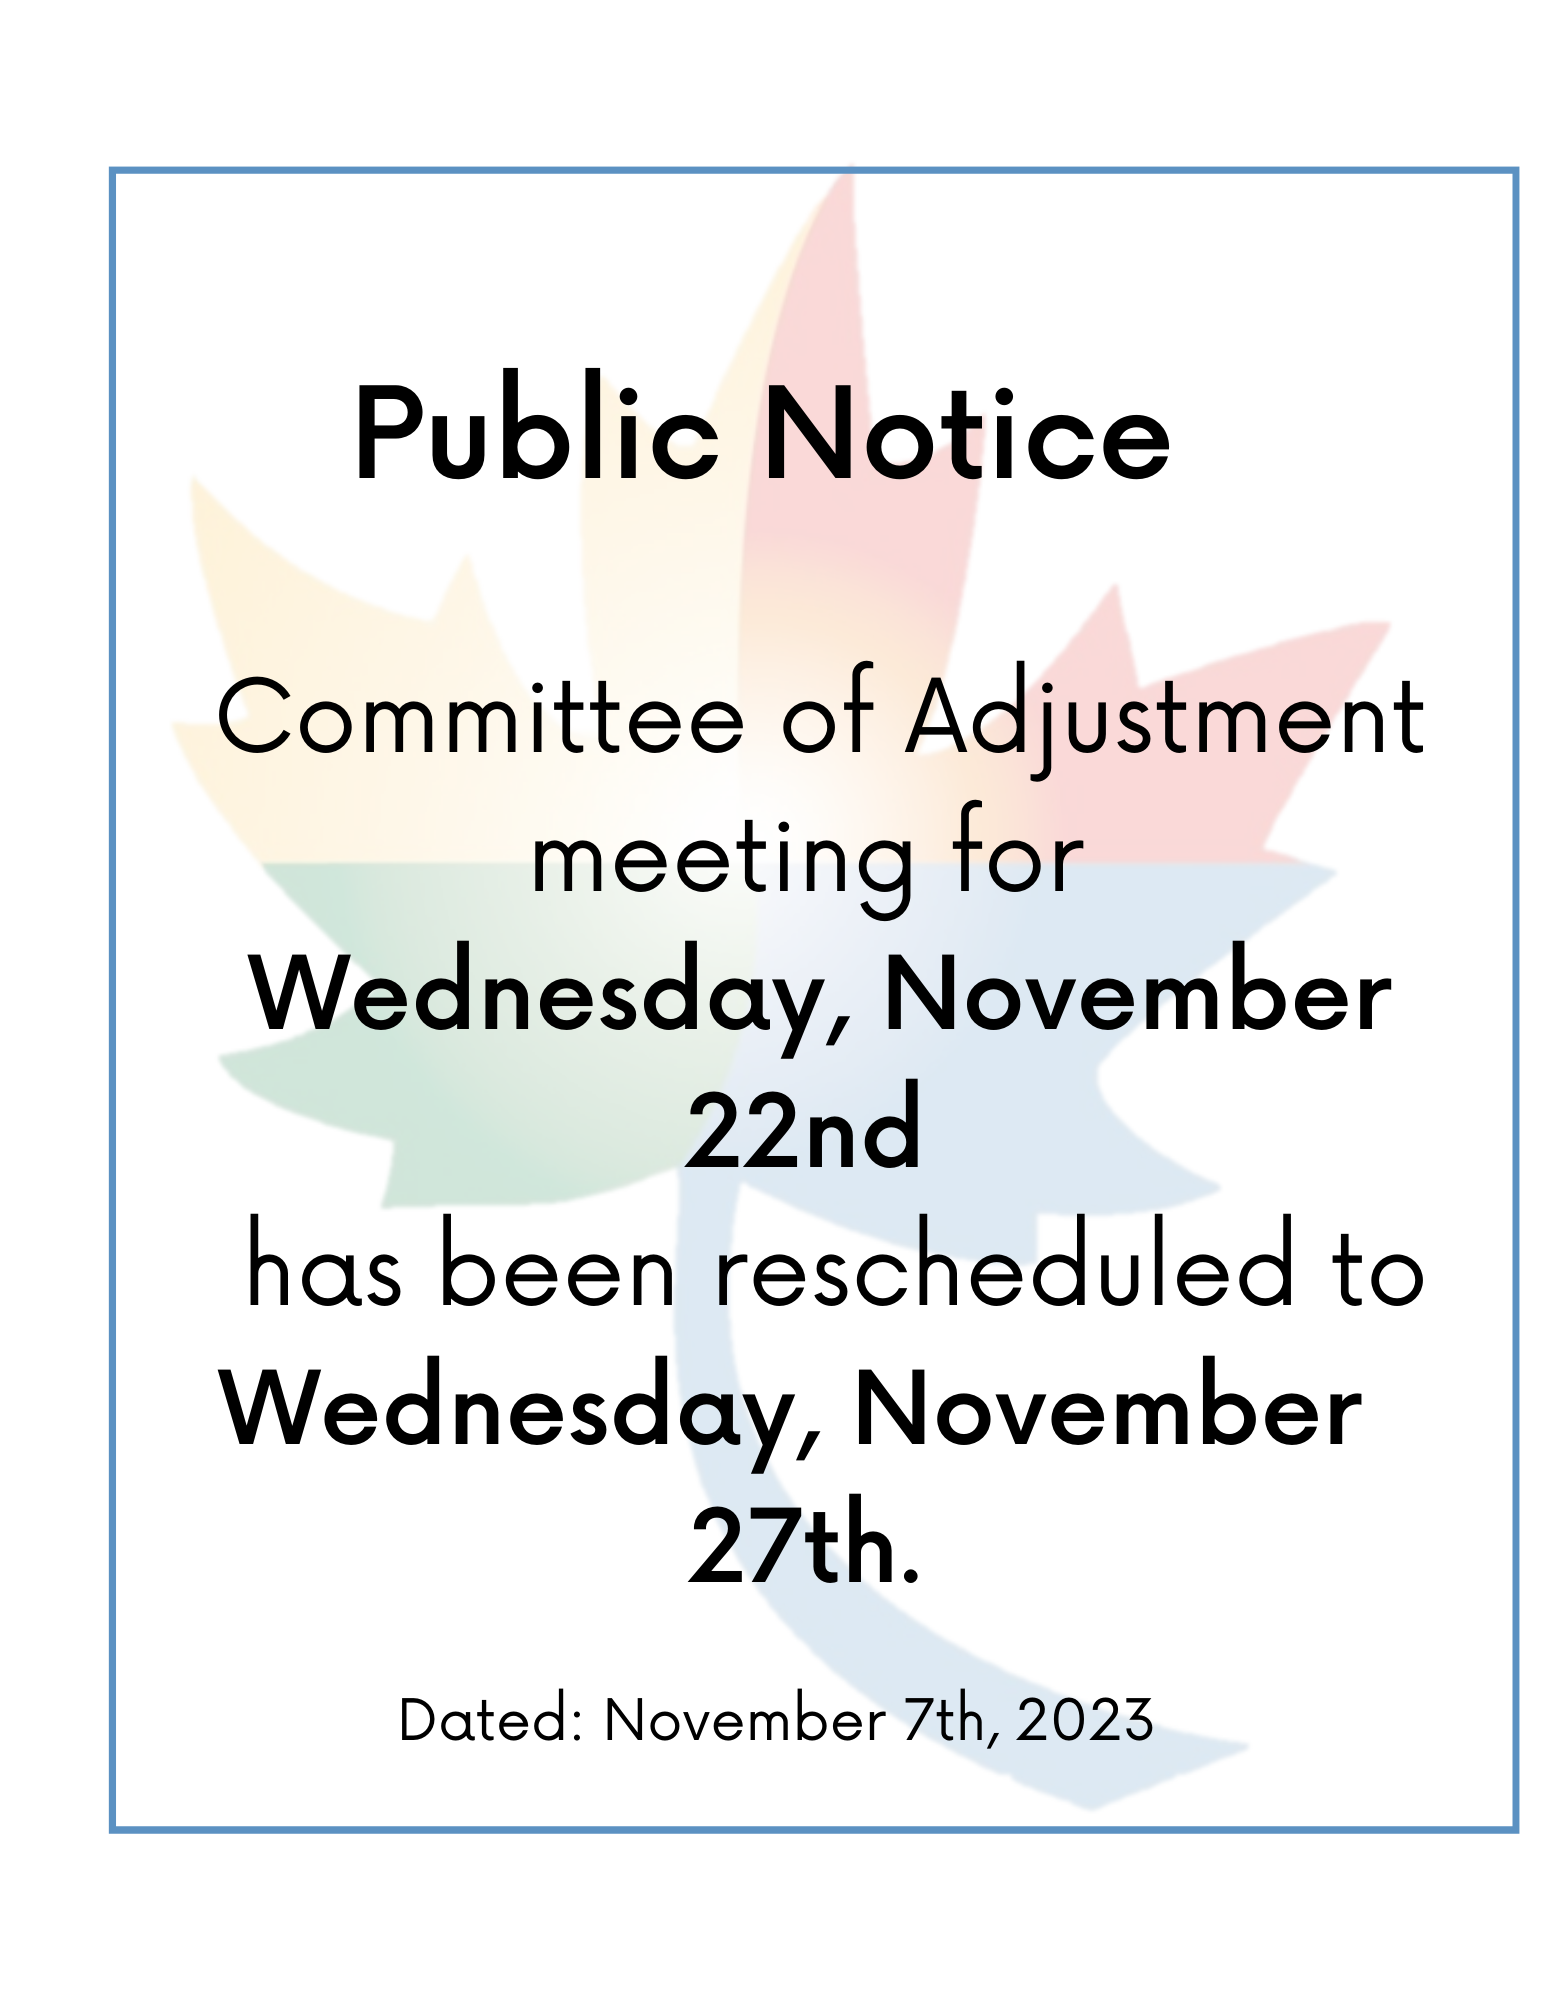 Committee of Adjustment Meeting Rescheduled